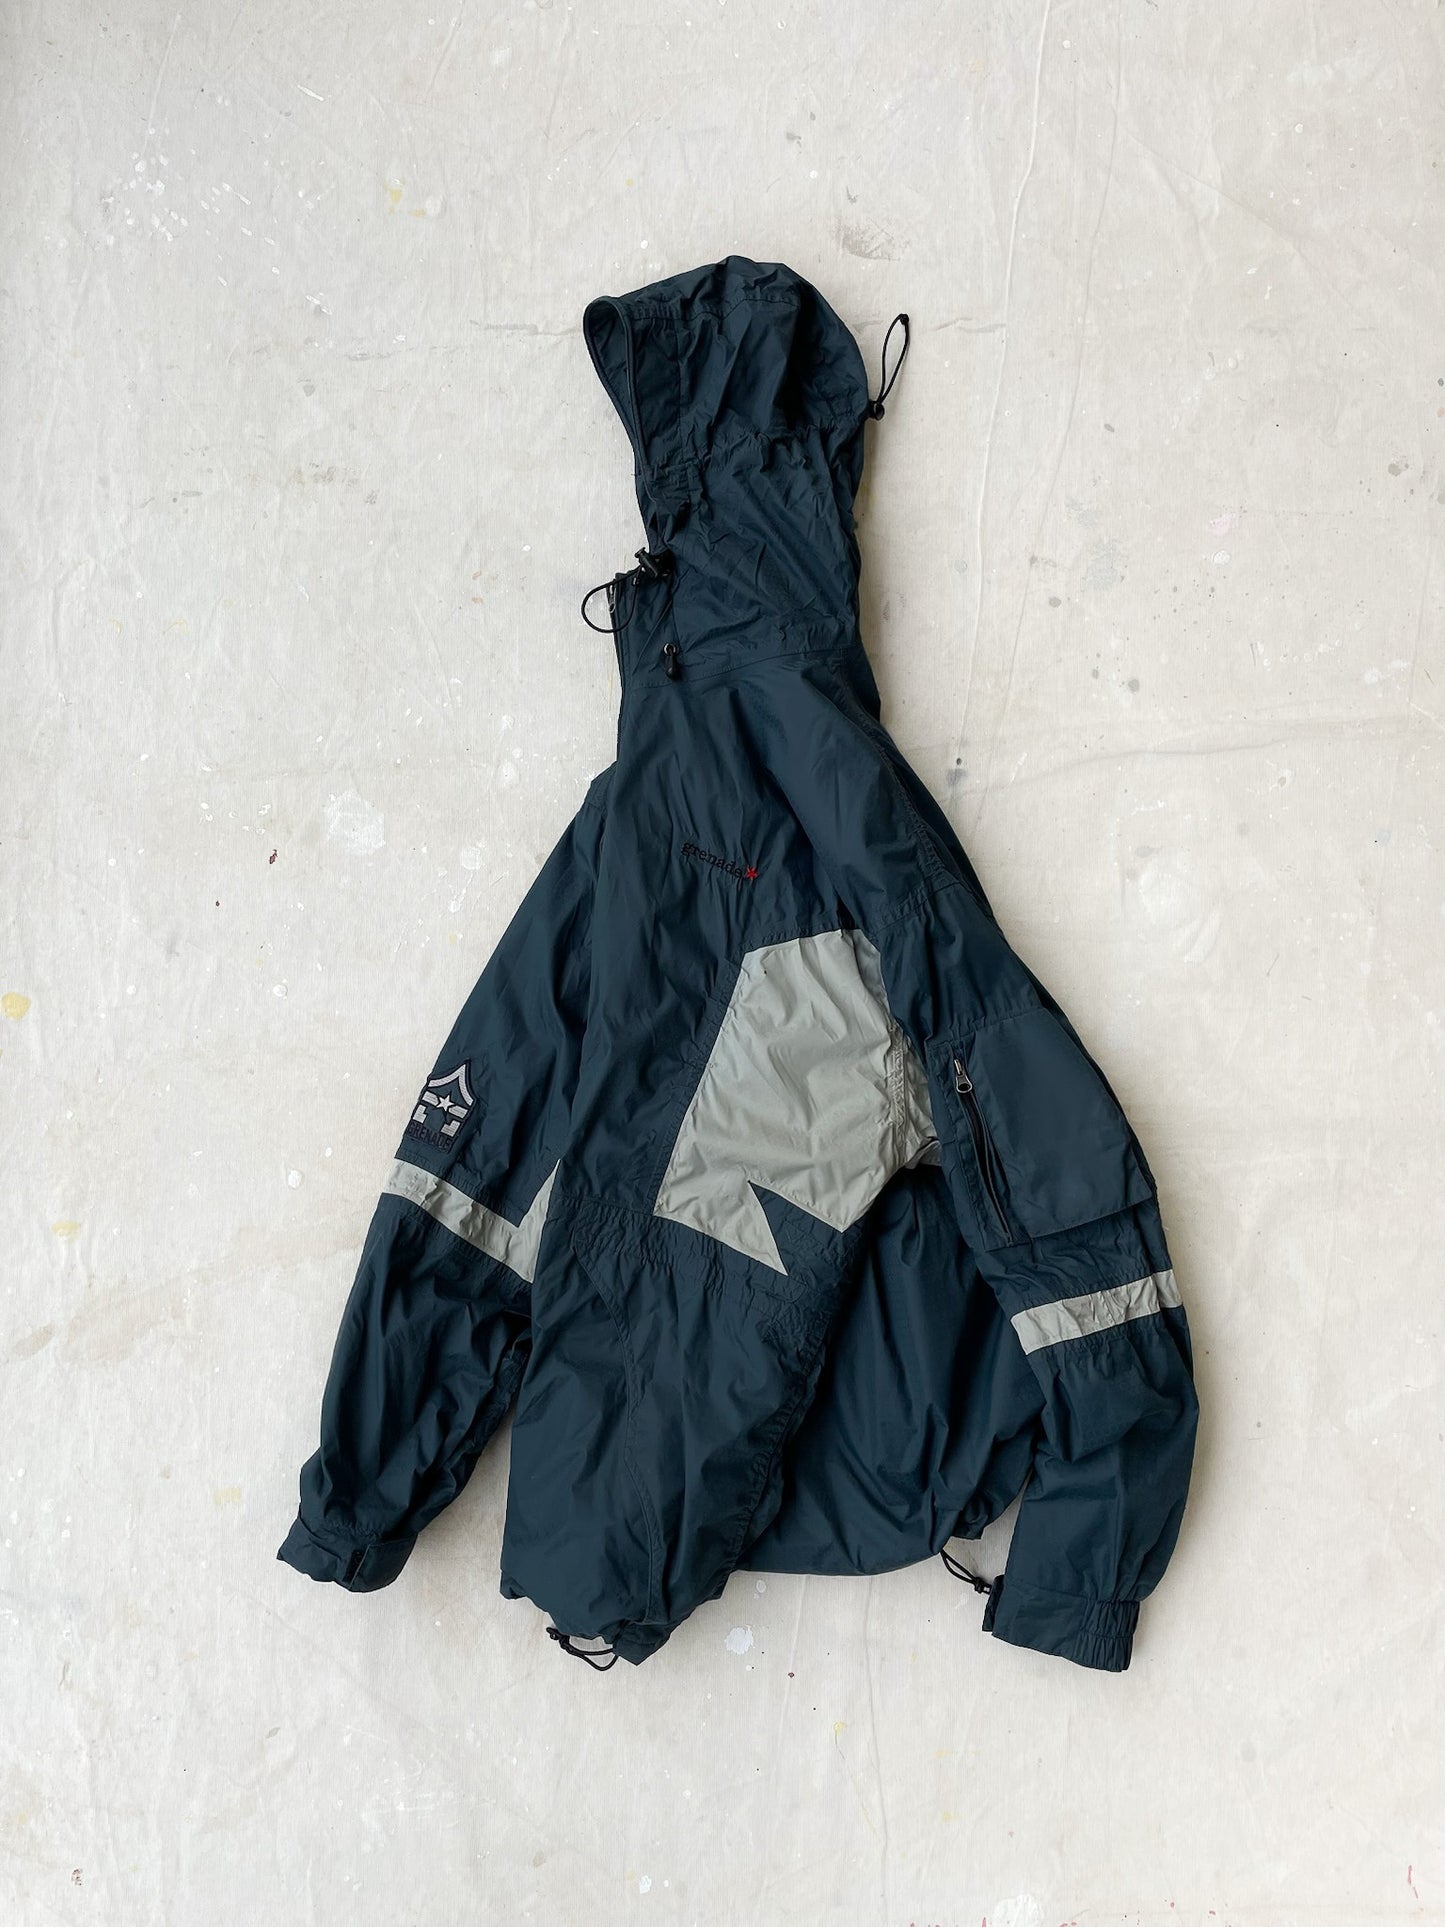 Grenade Gloves Snowboard Jacket—[L]